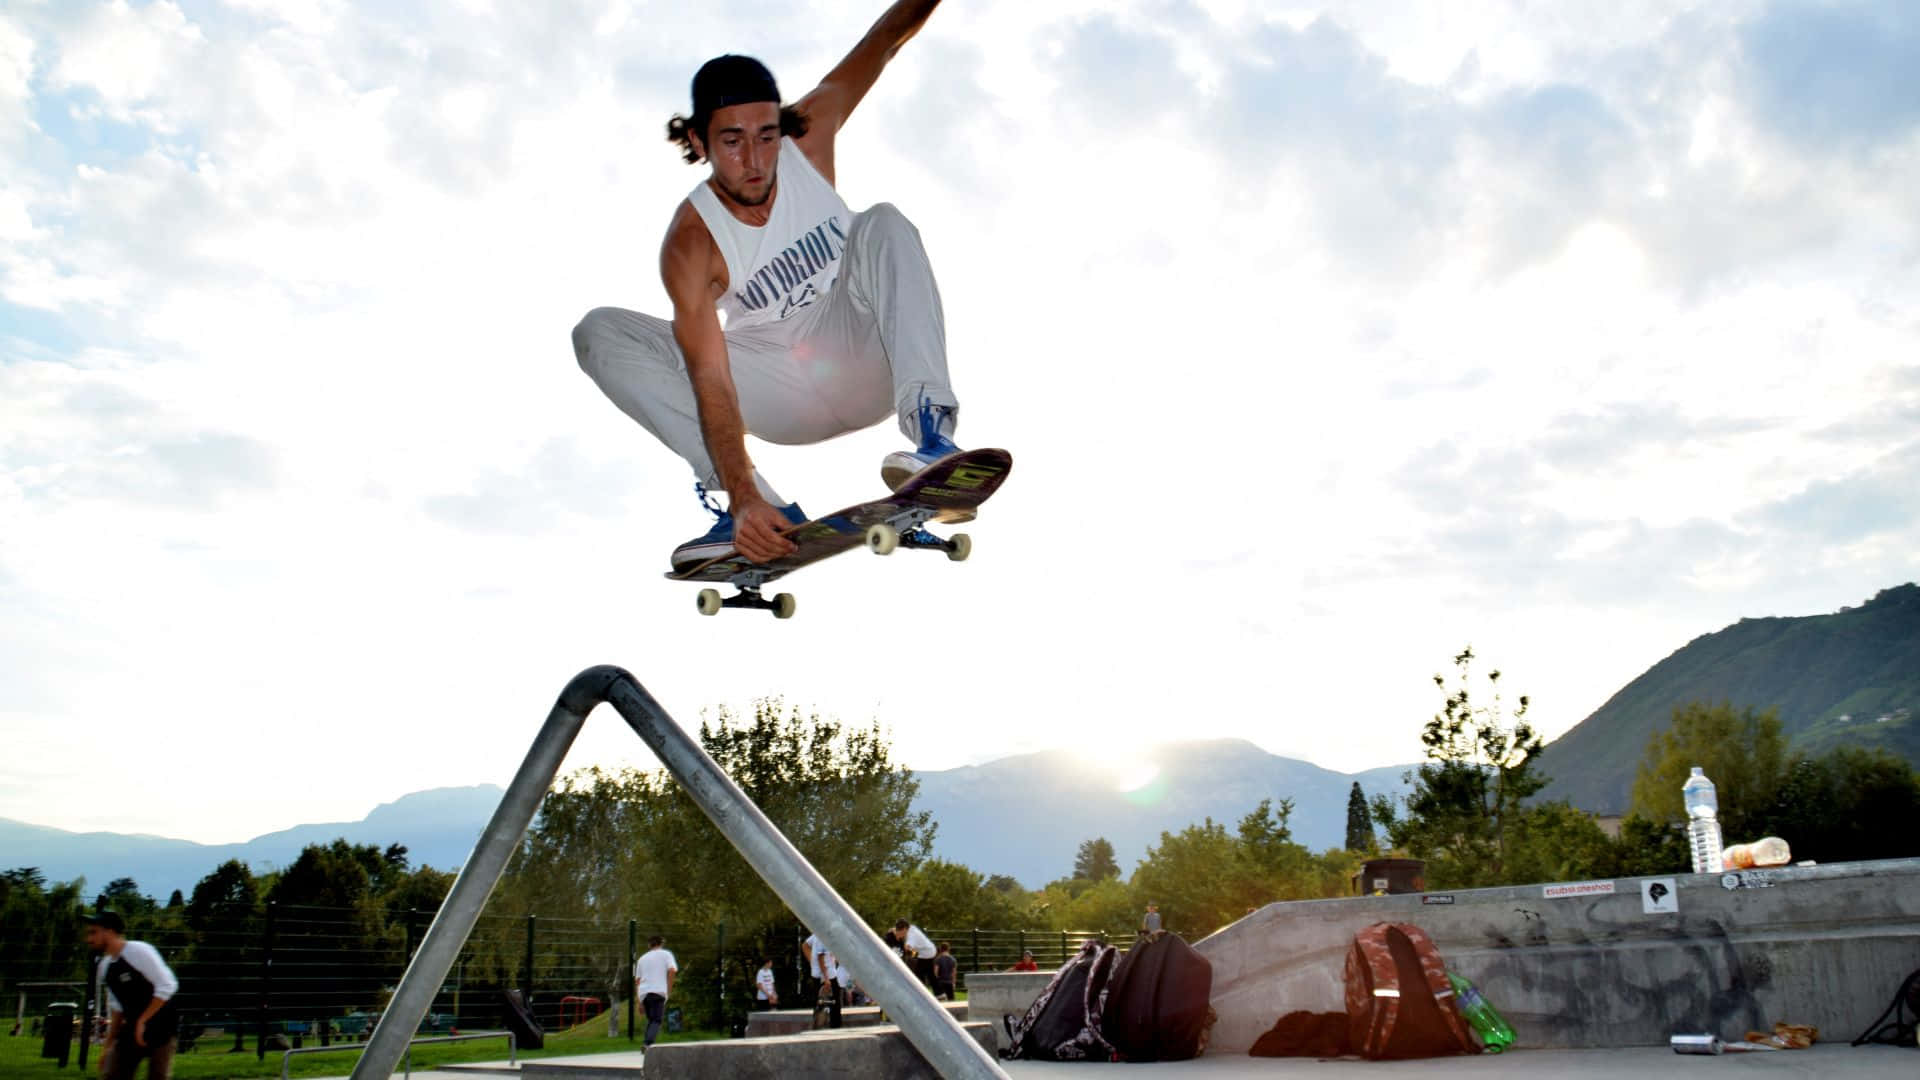 Unoskater Che Esegue Un Salto In Uno Skate Park.